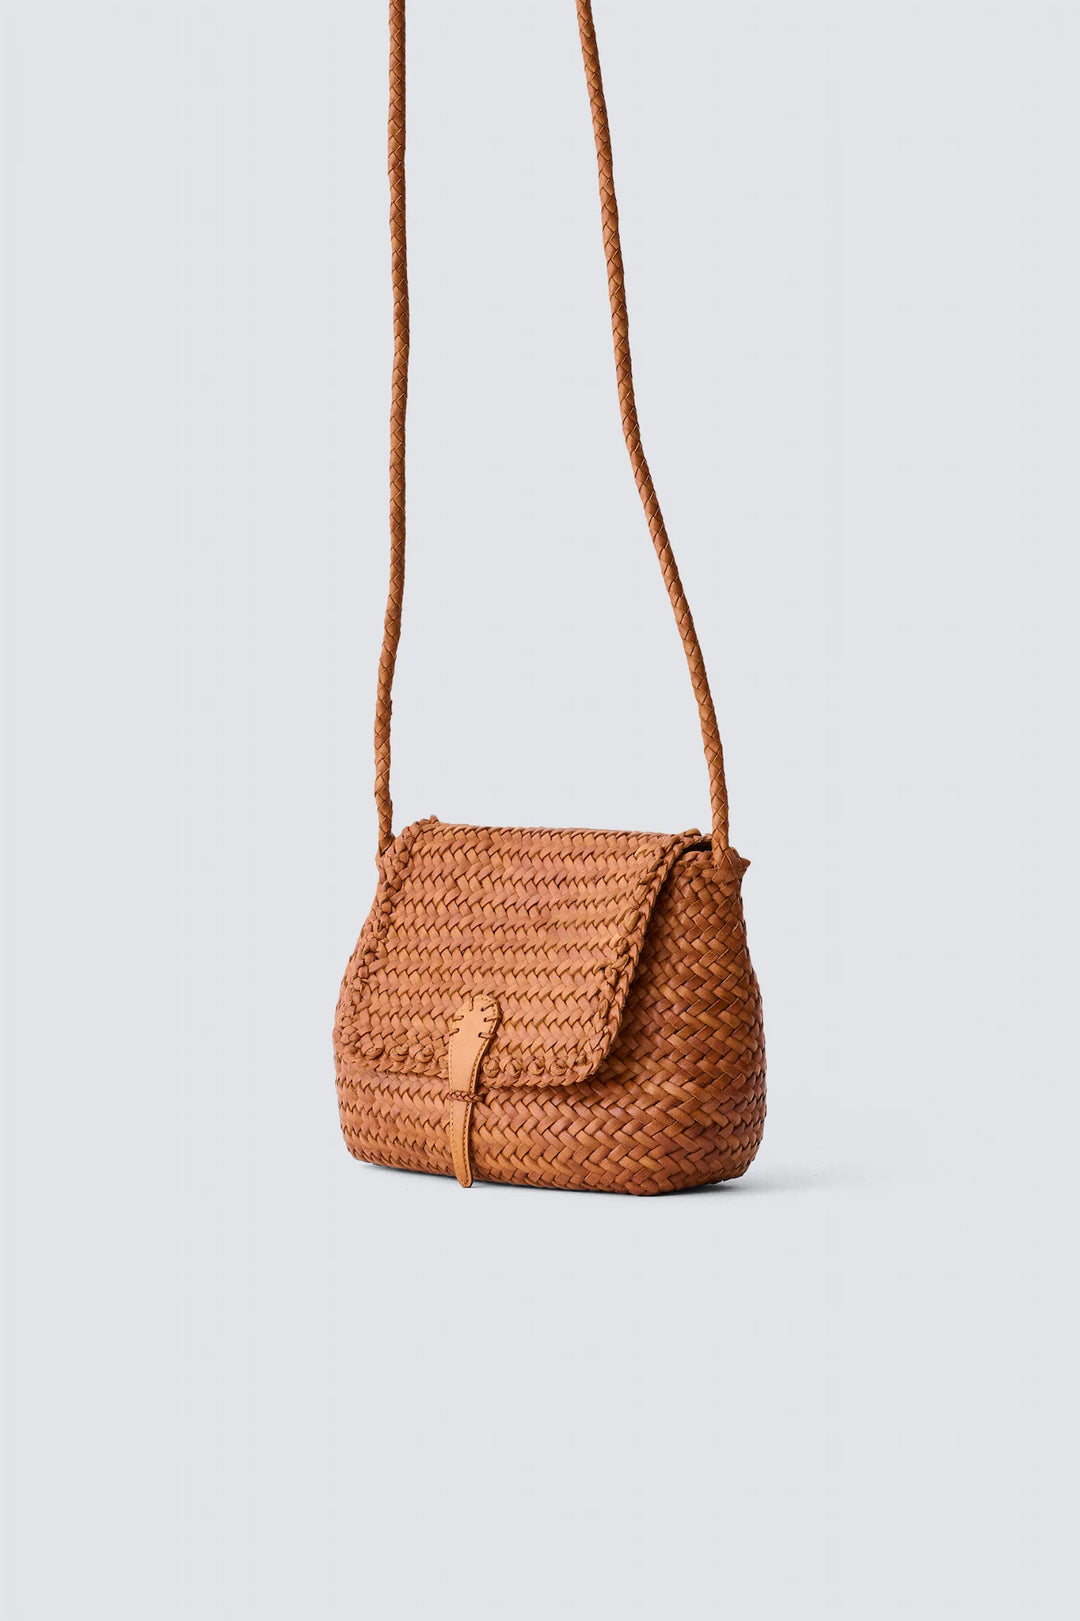 Dragon Diffusion - Medium City Bag Tan - Woven Leather Bag Handmade